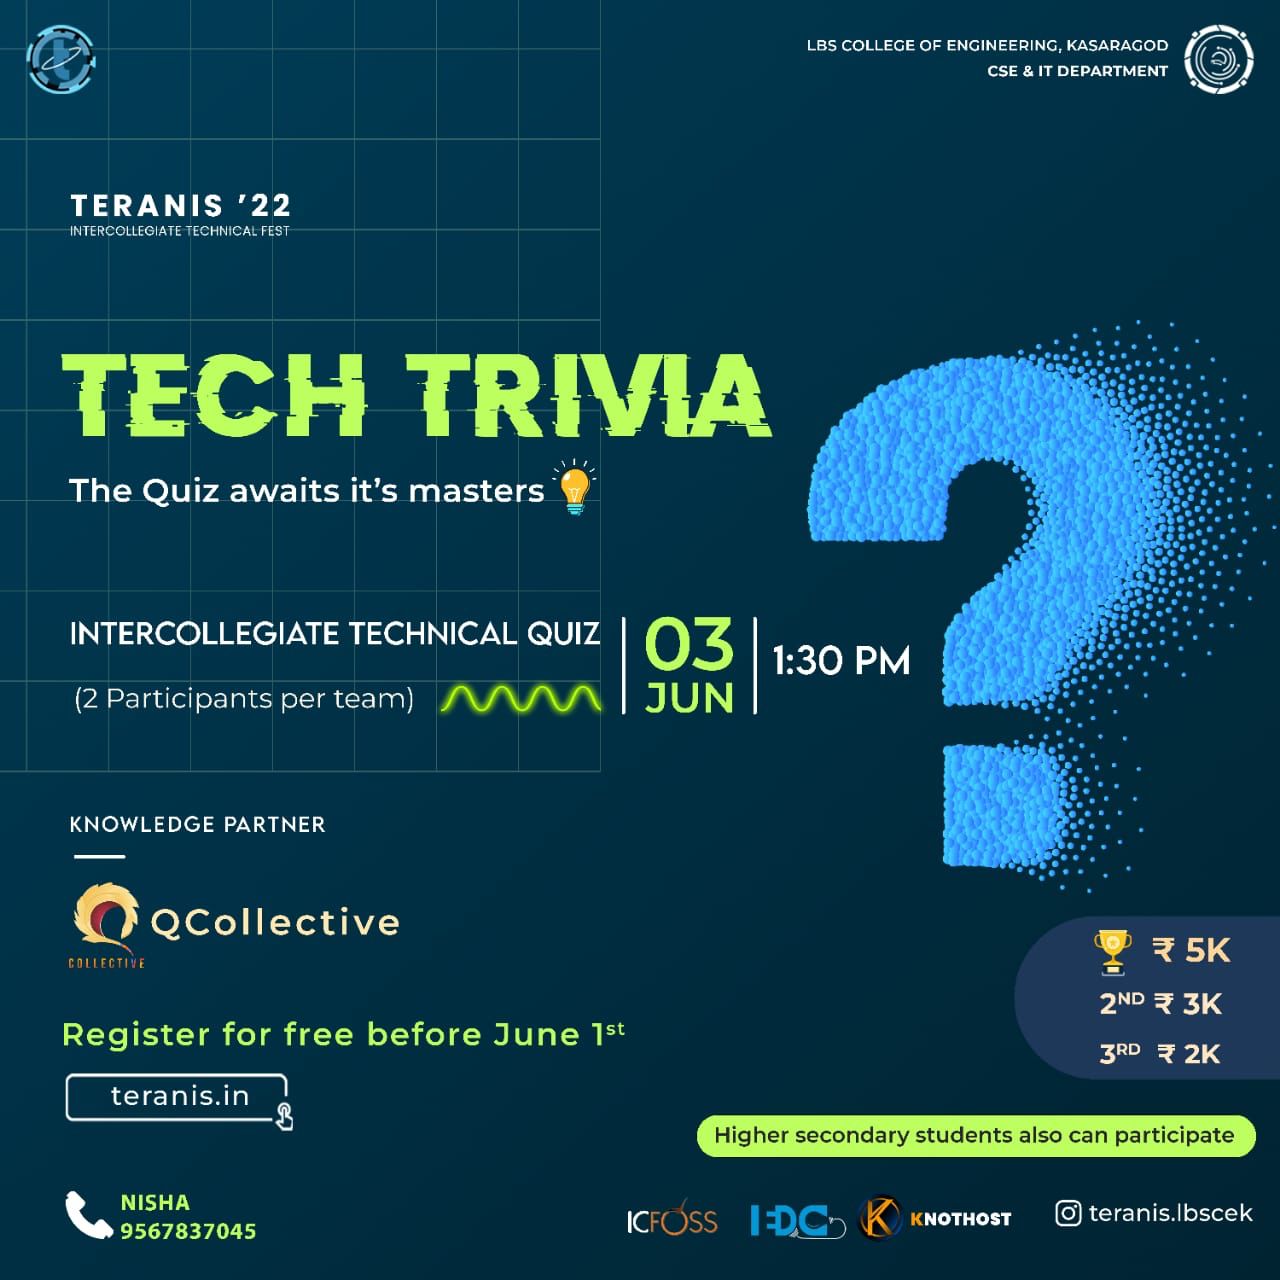 Tech Trivia